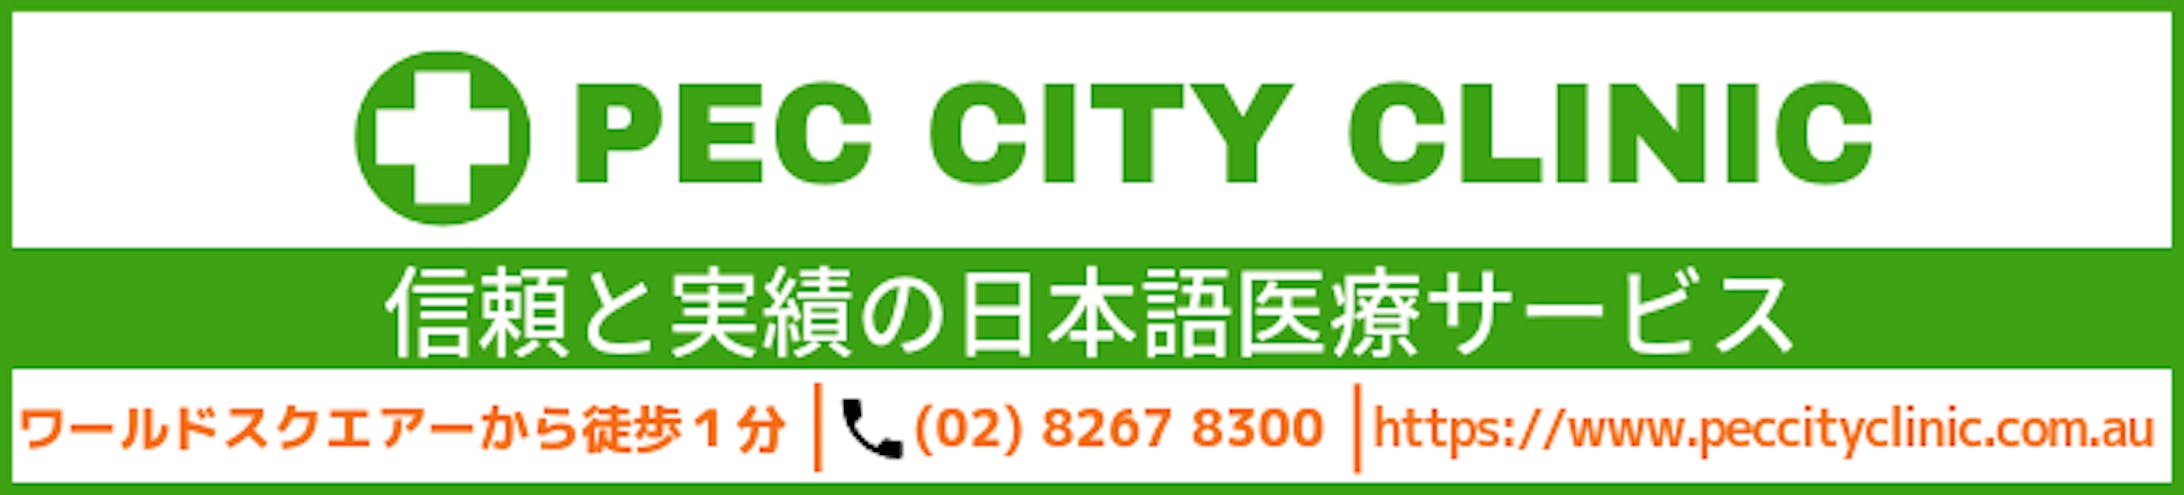 PEC CITY CLINIC -1